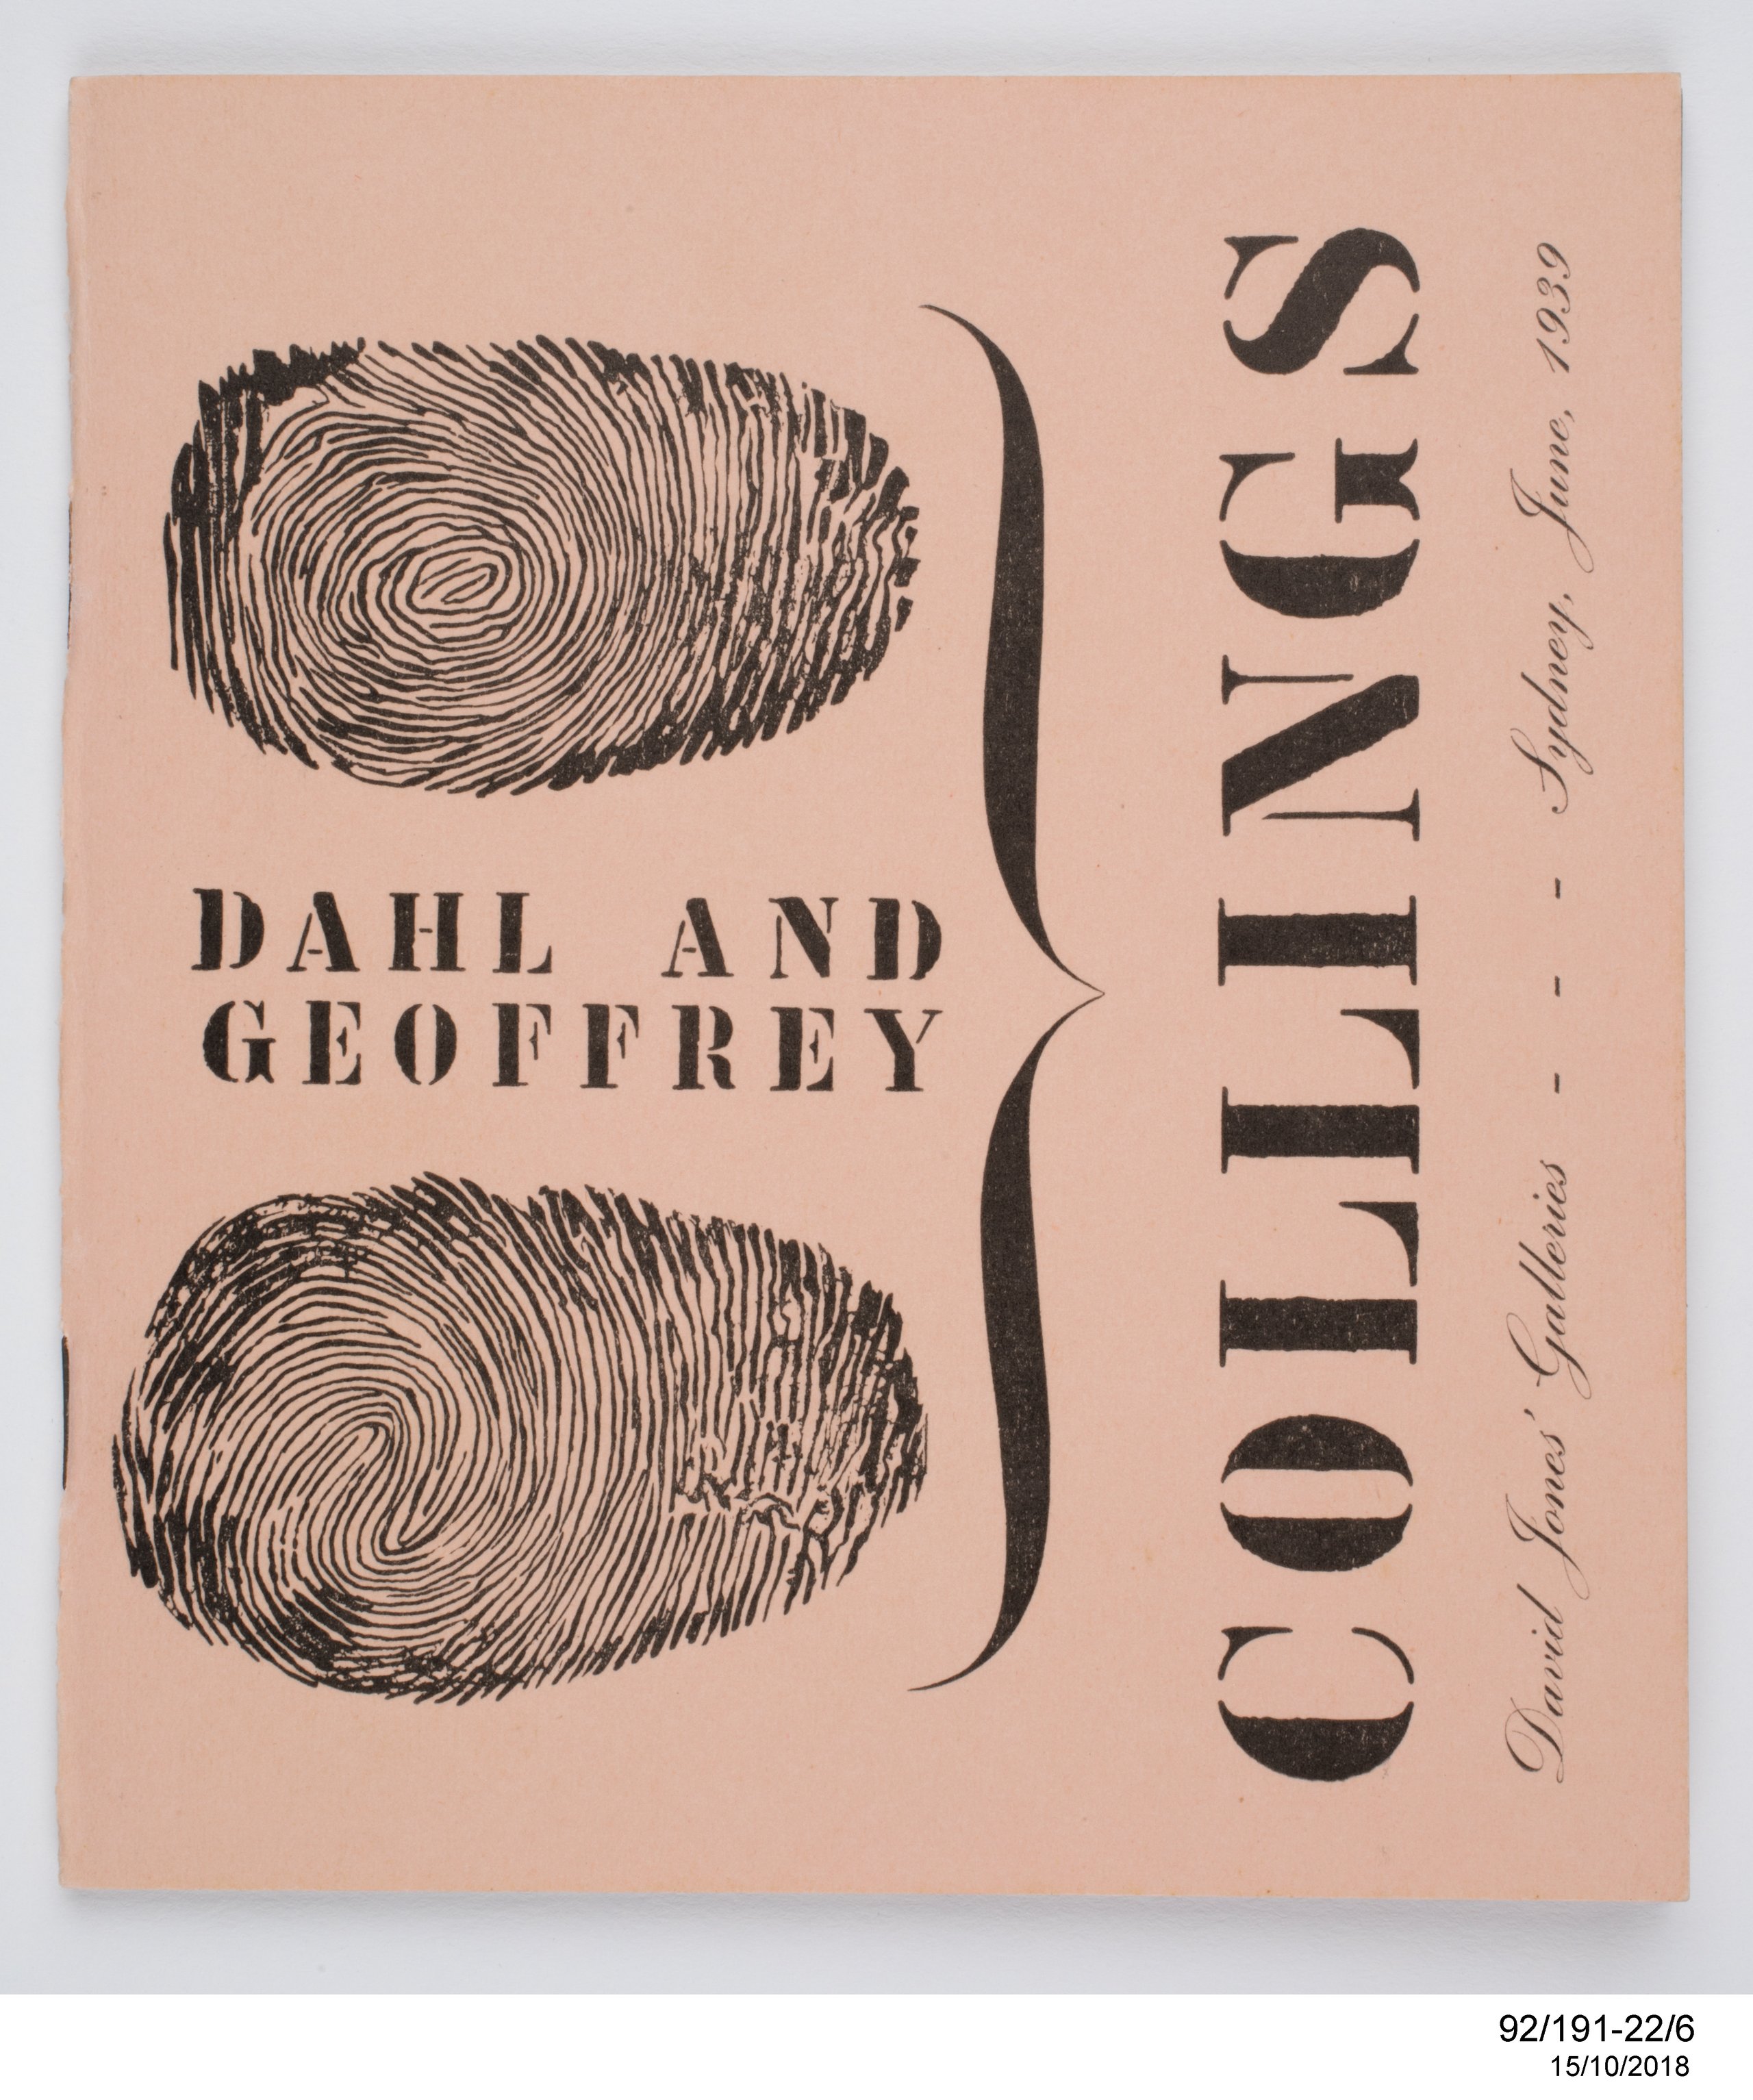 Exhibition catalogue for Dahl & Geoffrey Collings' exhibition at the David Jones Gallery